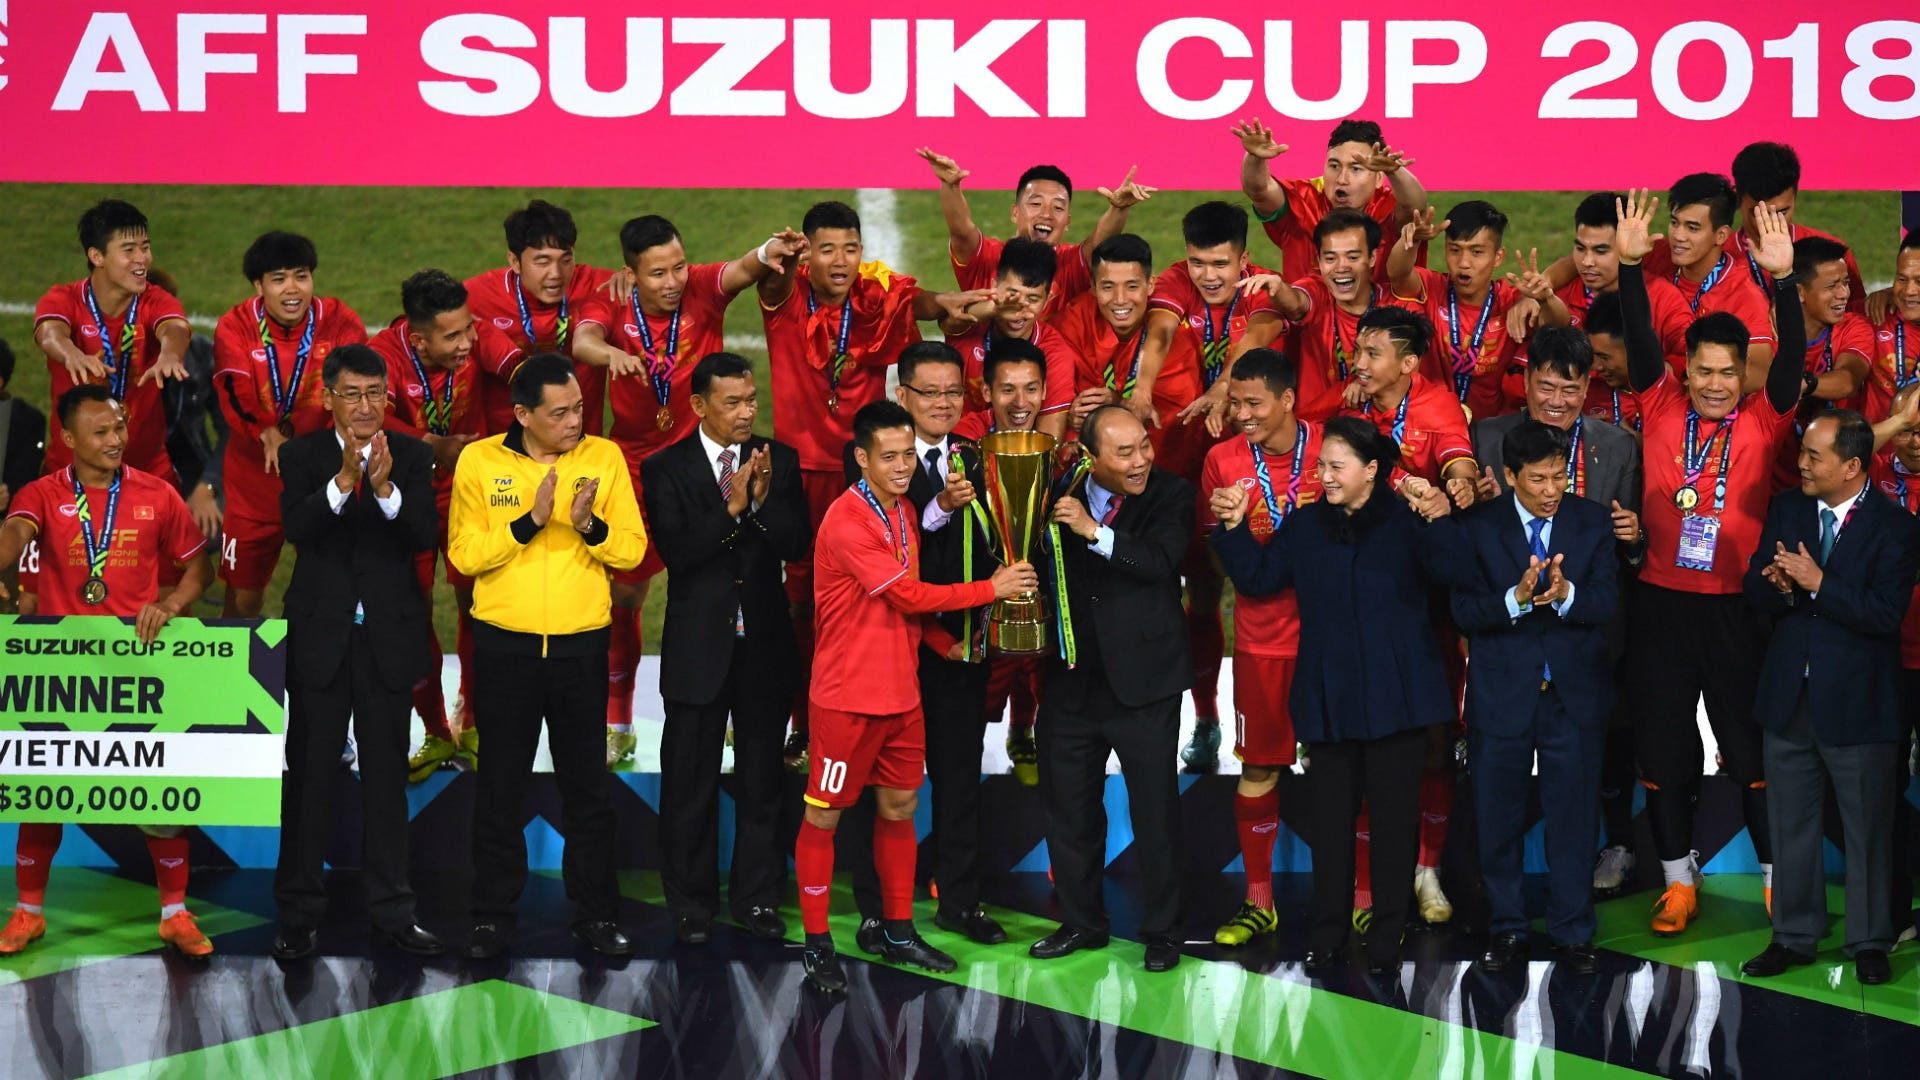 Datuk Hamidin, 2018 AFF Suzuki Cup